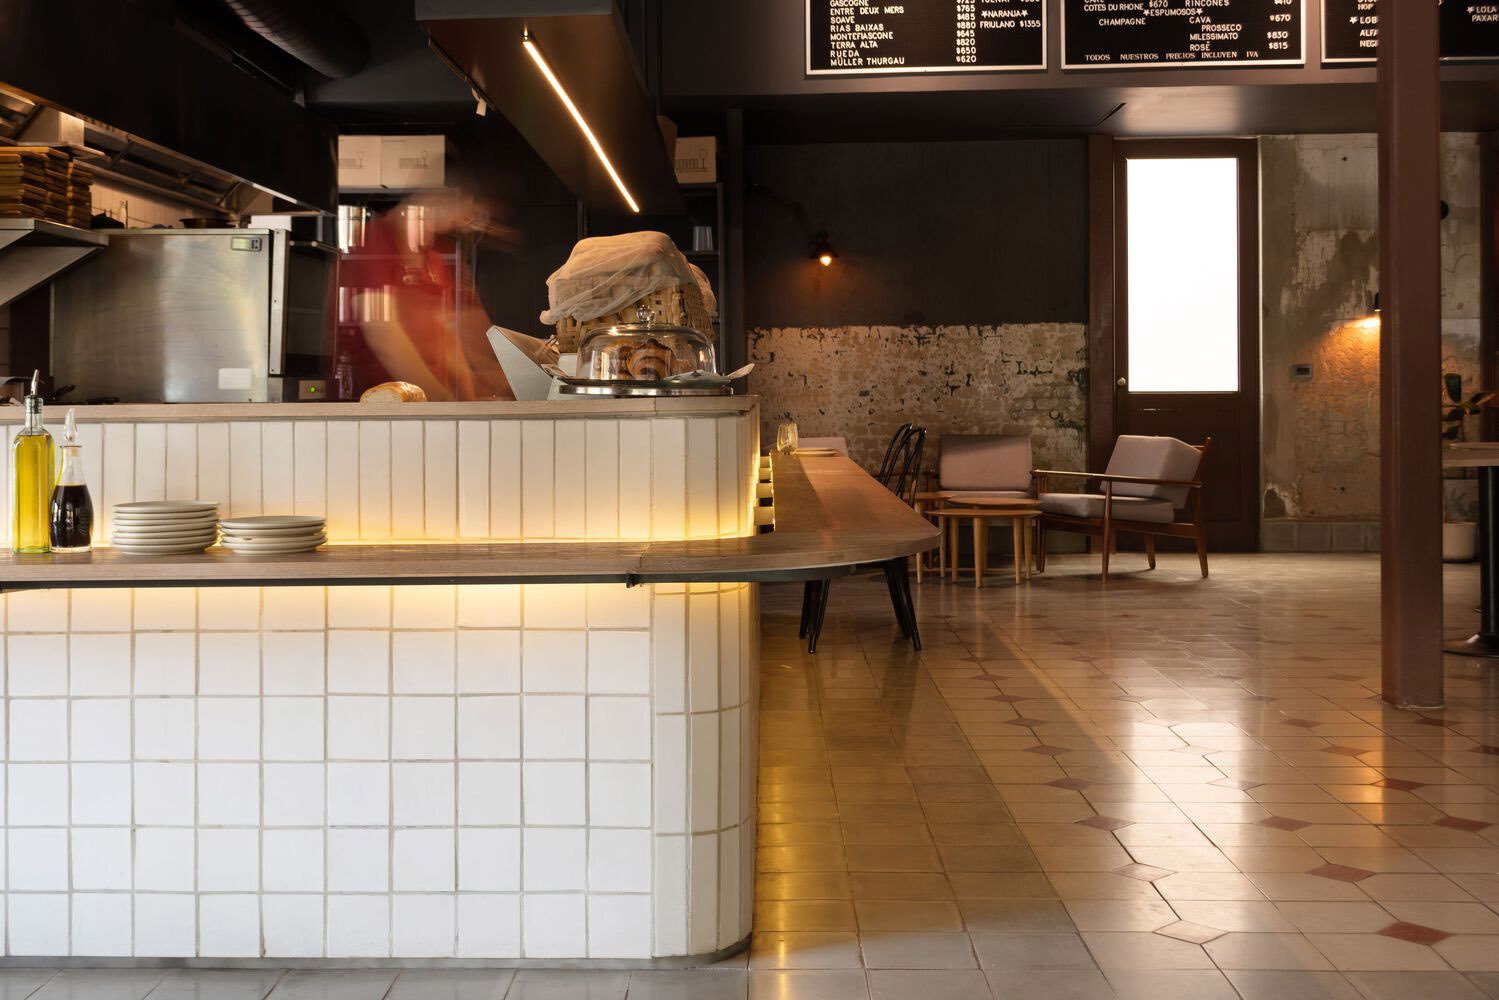 Antumbra estudio,Romea Morelos,餐廳設計案例,創意餐廳設計,190㎡餐廳設計,國外餐廳設計案例